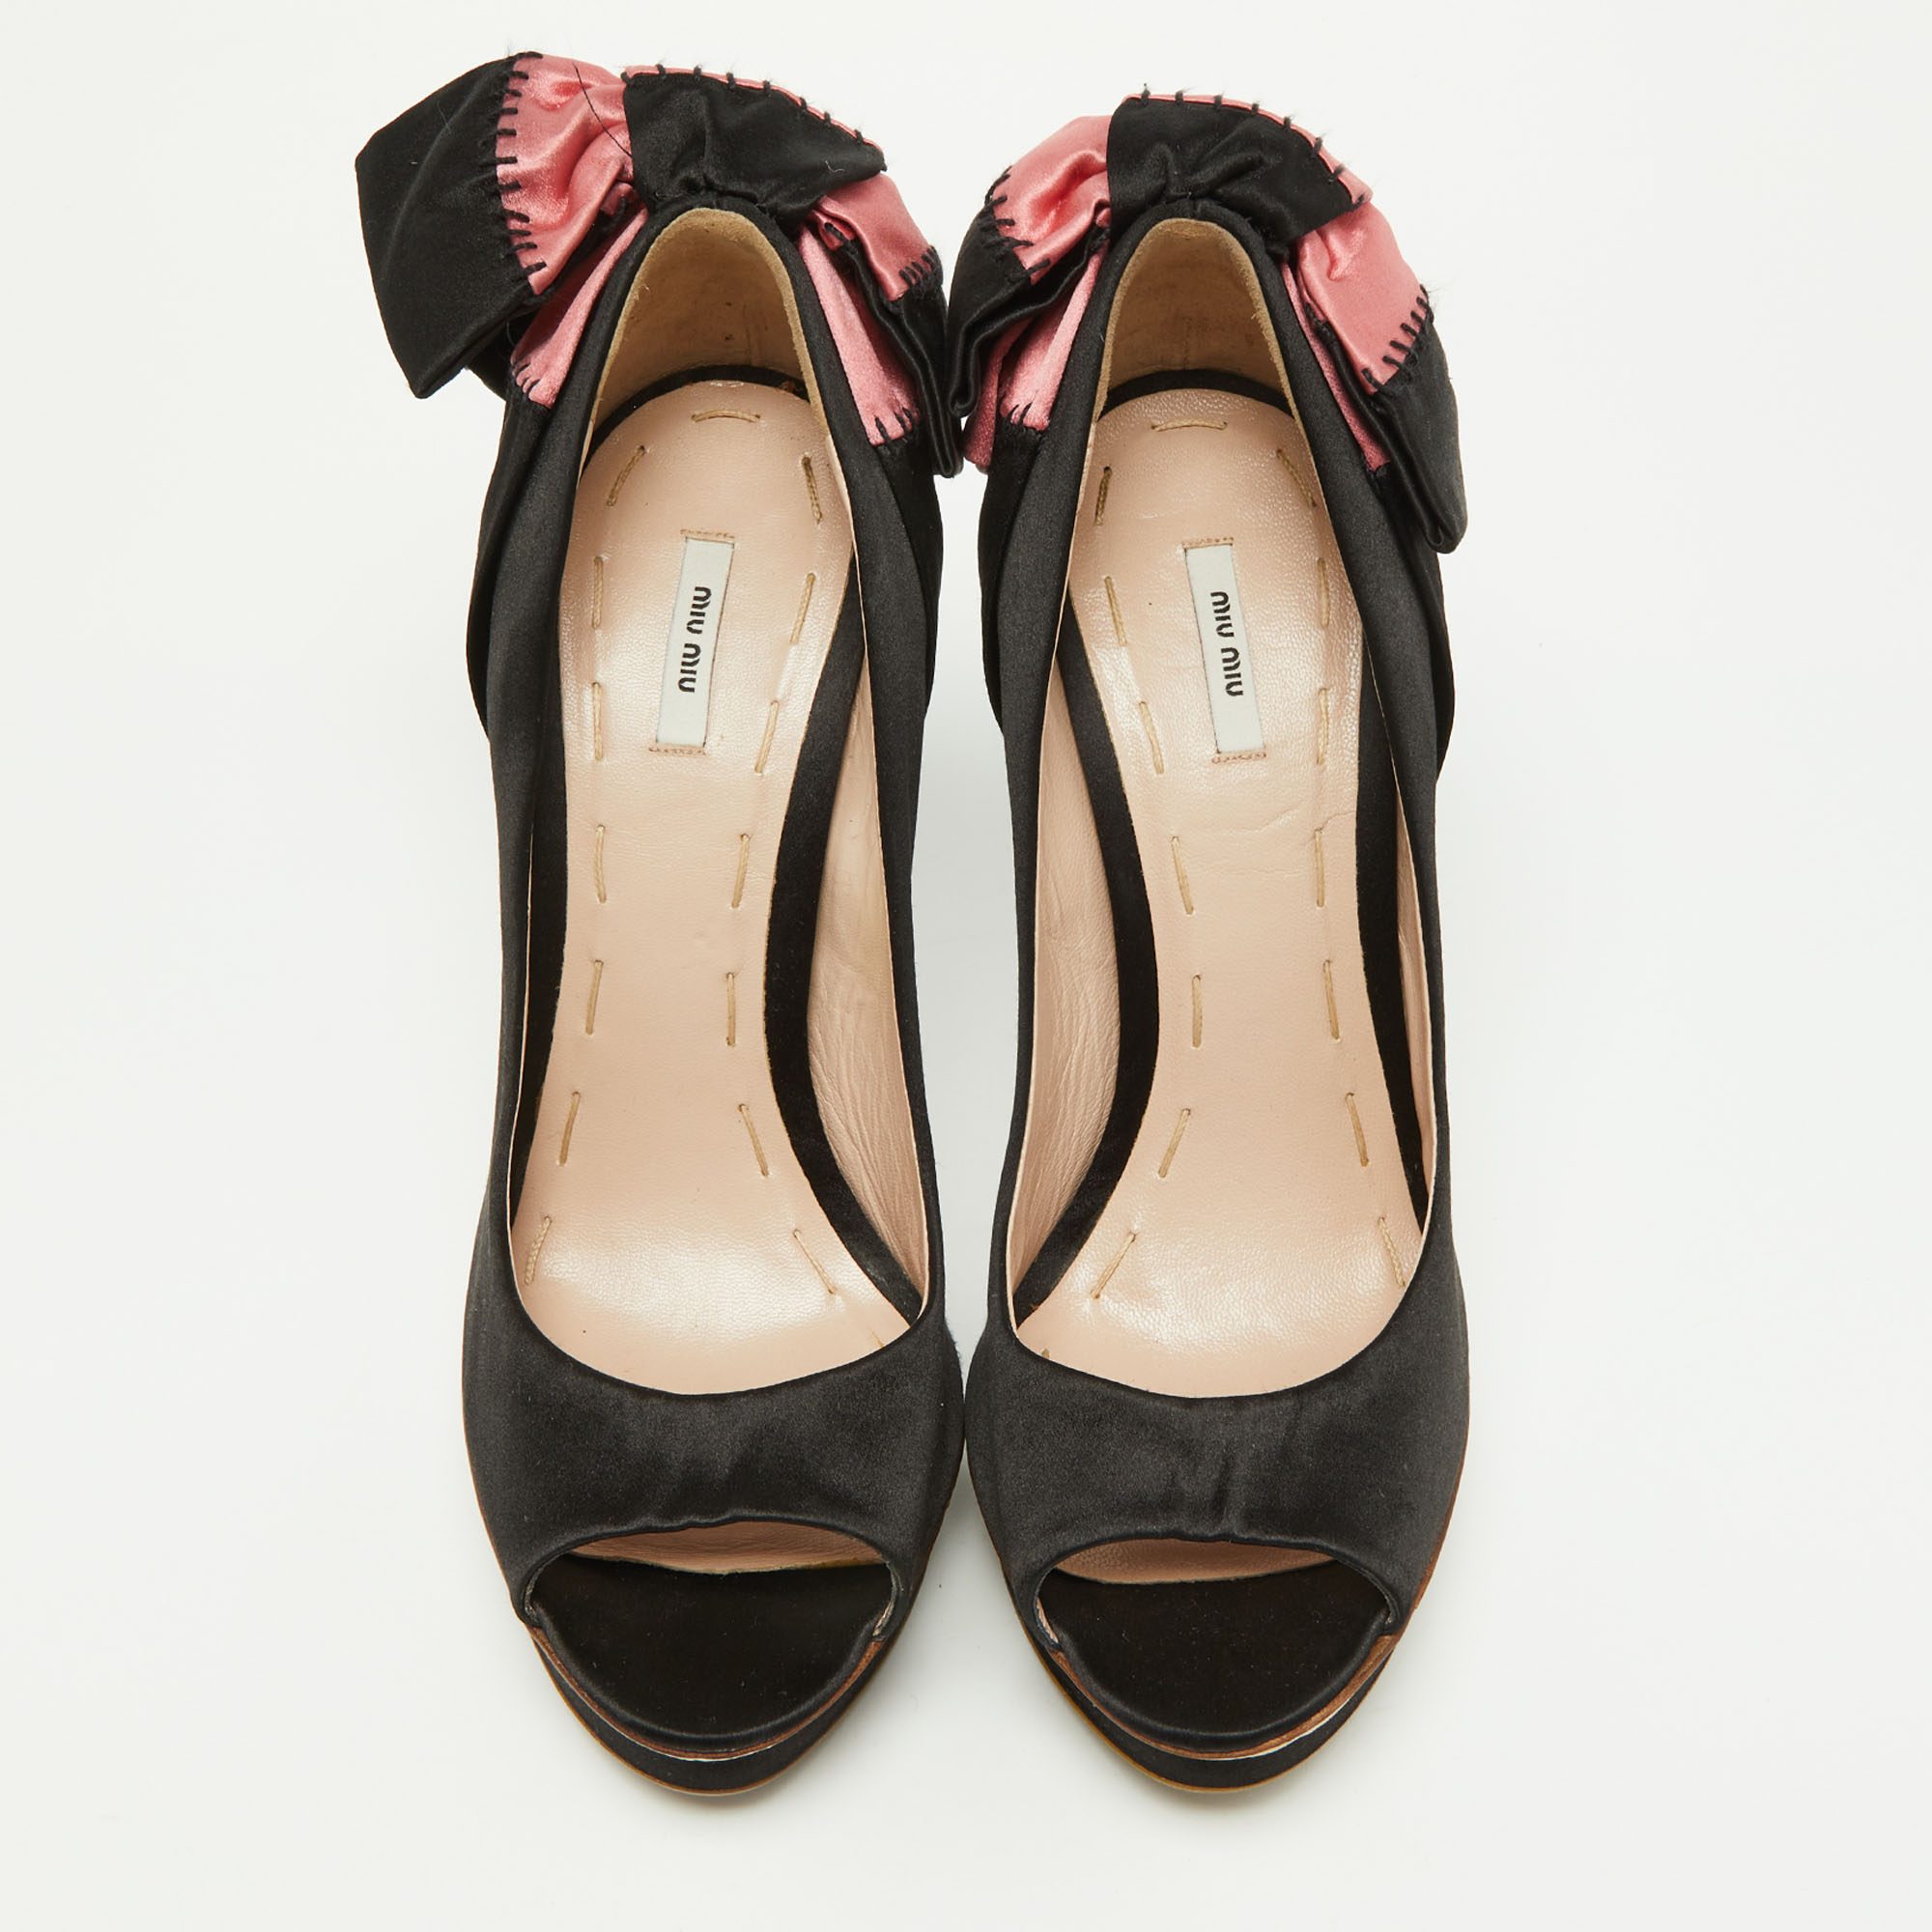 Miu Miu Black/Pink Satin Bow Peep Toe Pumps Size 38.5